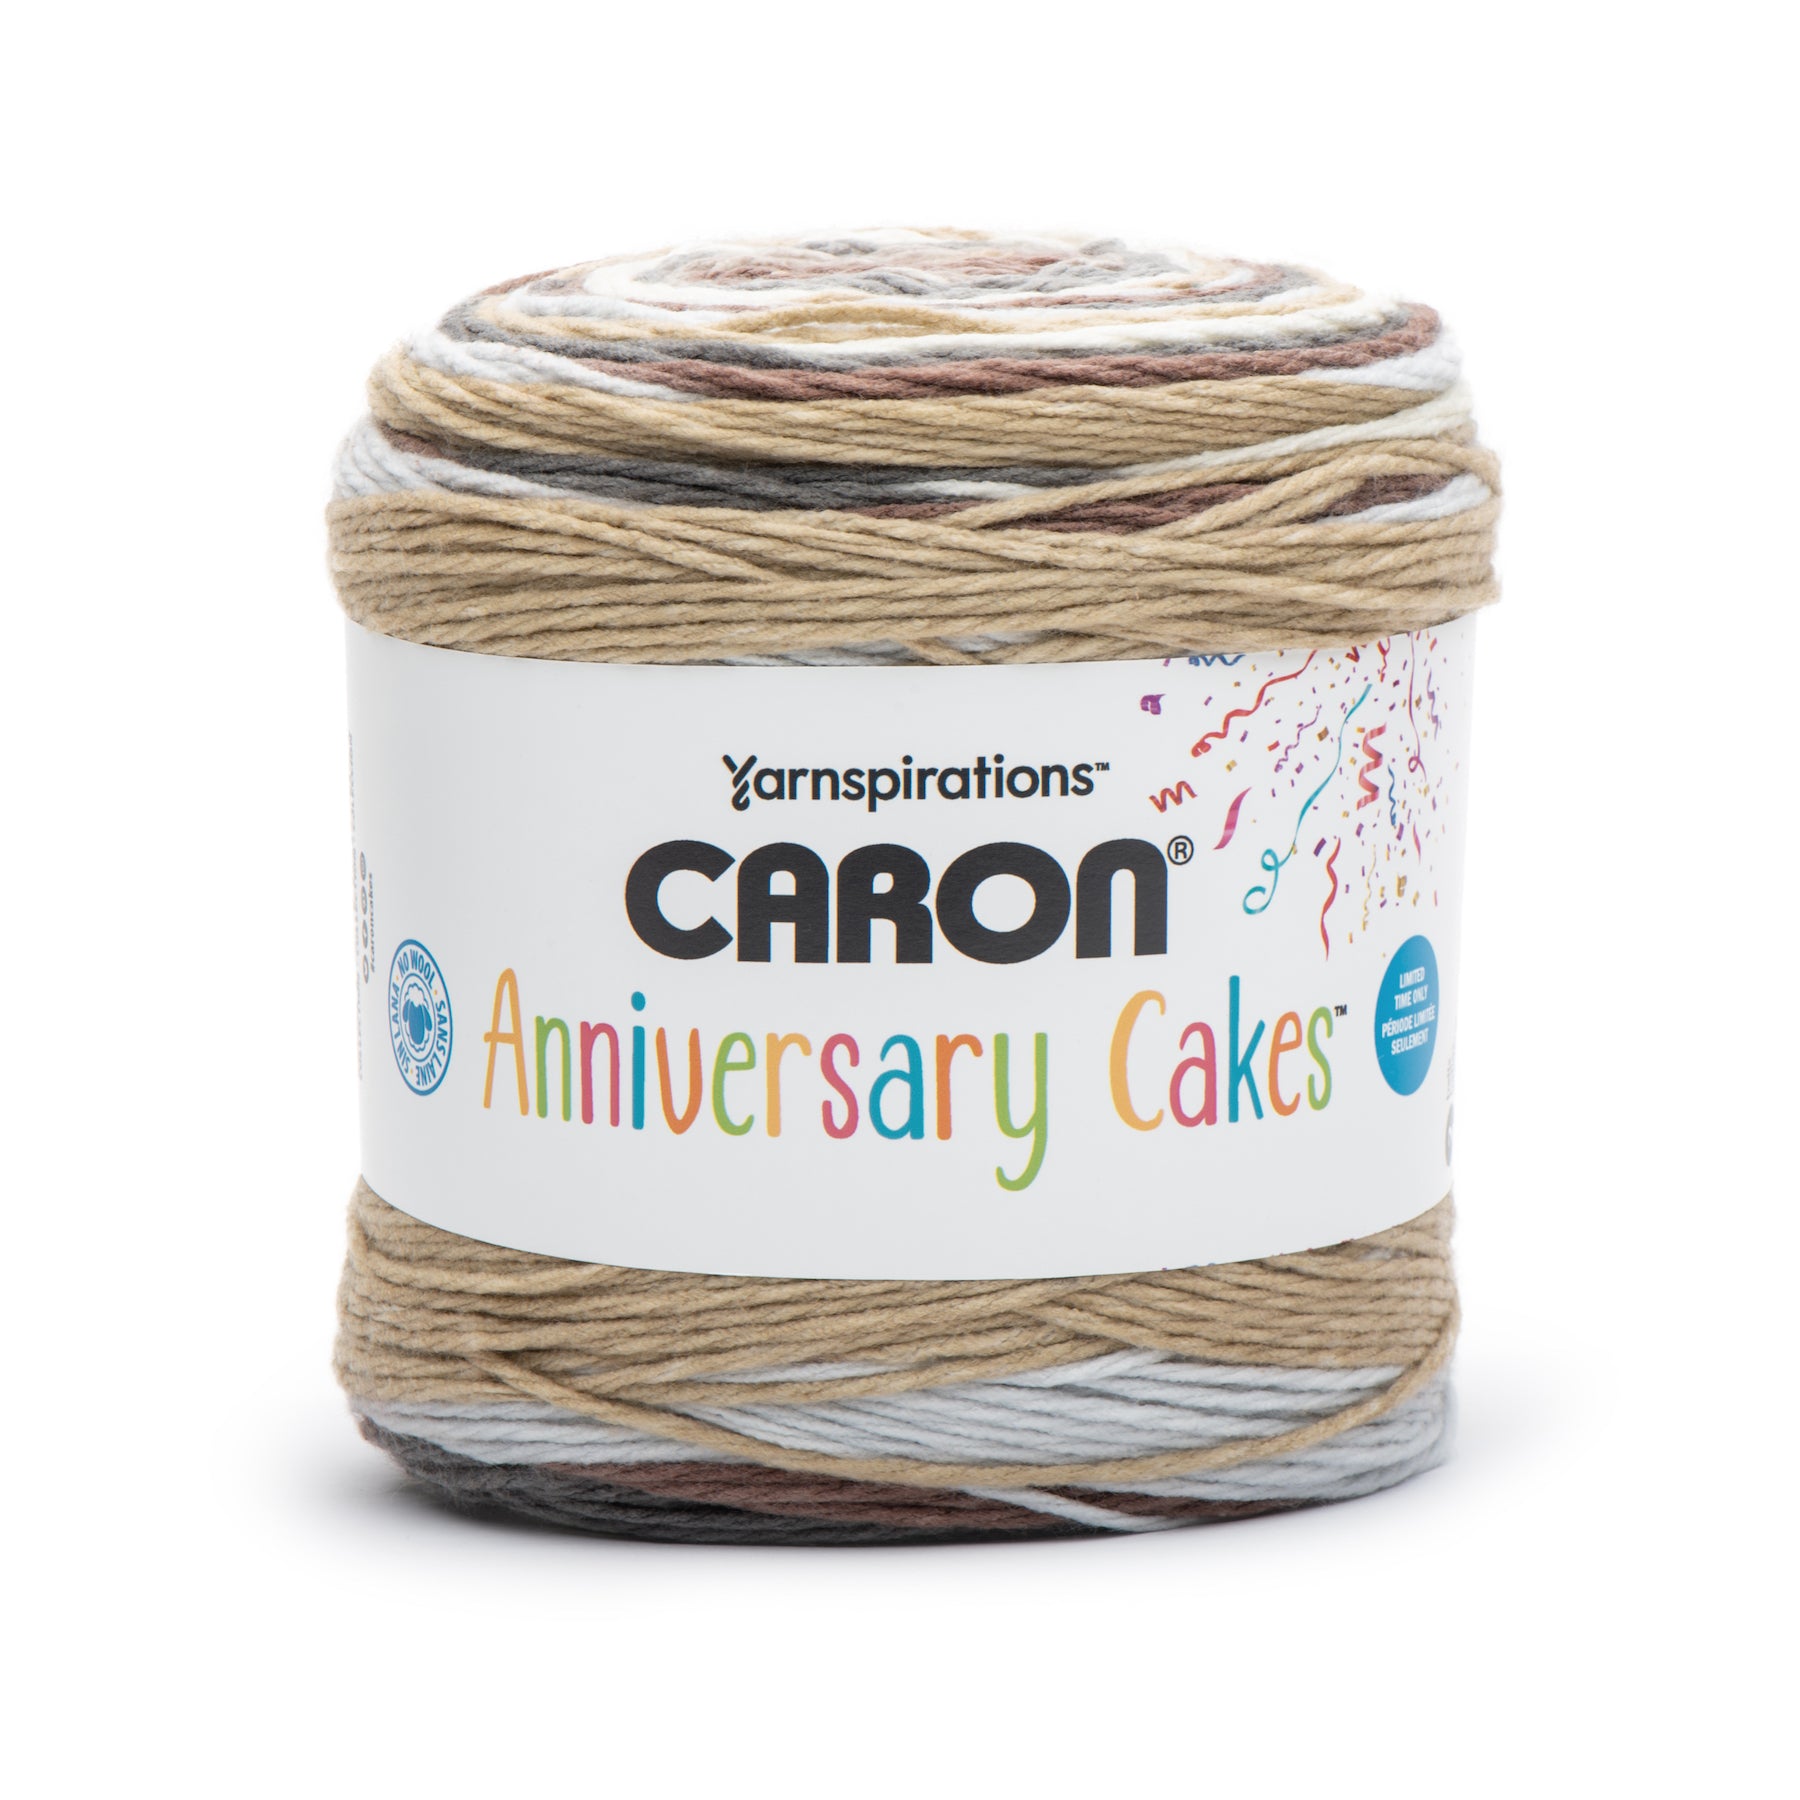 Caron Anniversary Cakes Yarn (1000g/35.3oz) - Discontinued Shades